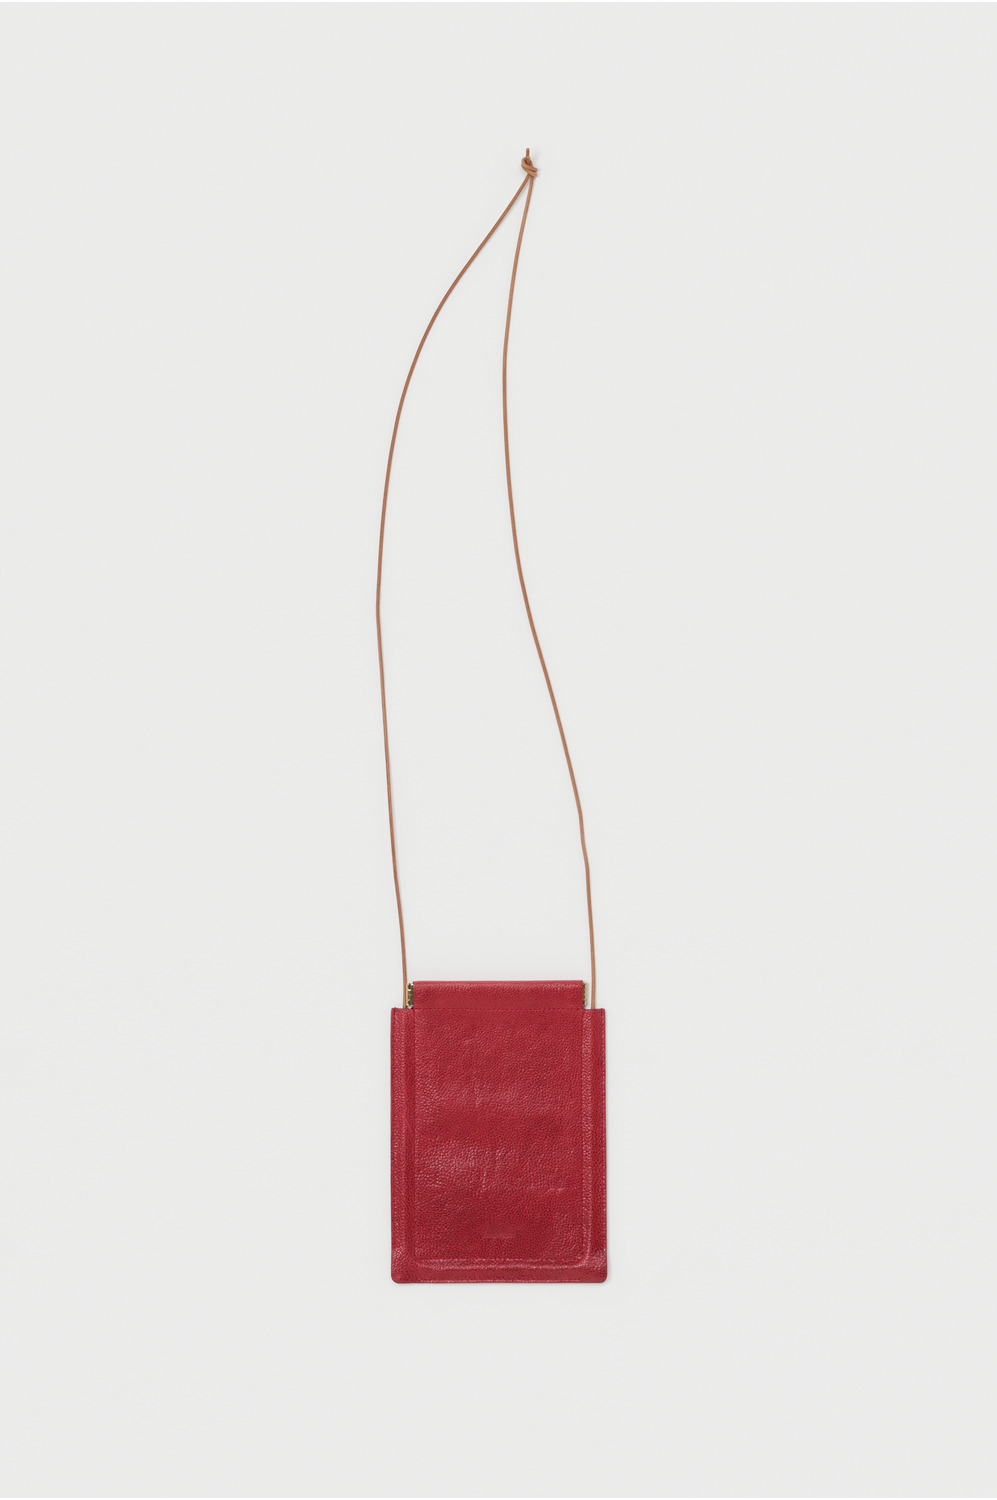 purse bag 詳細画像 red 1